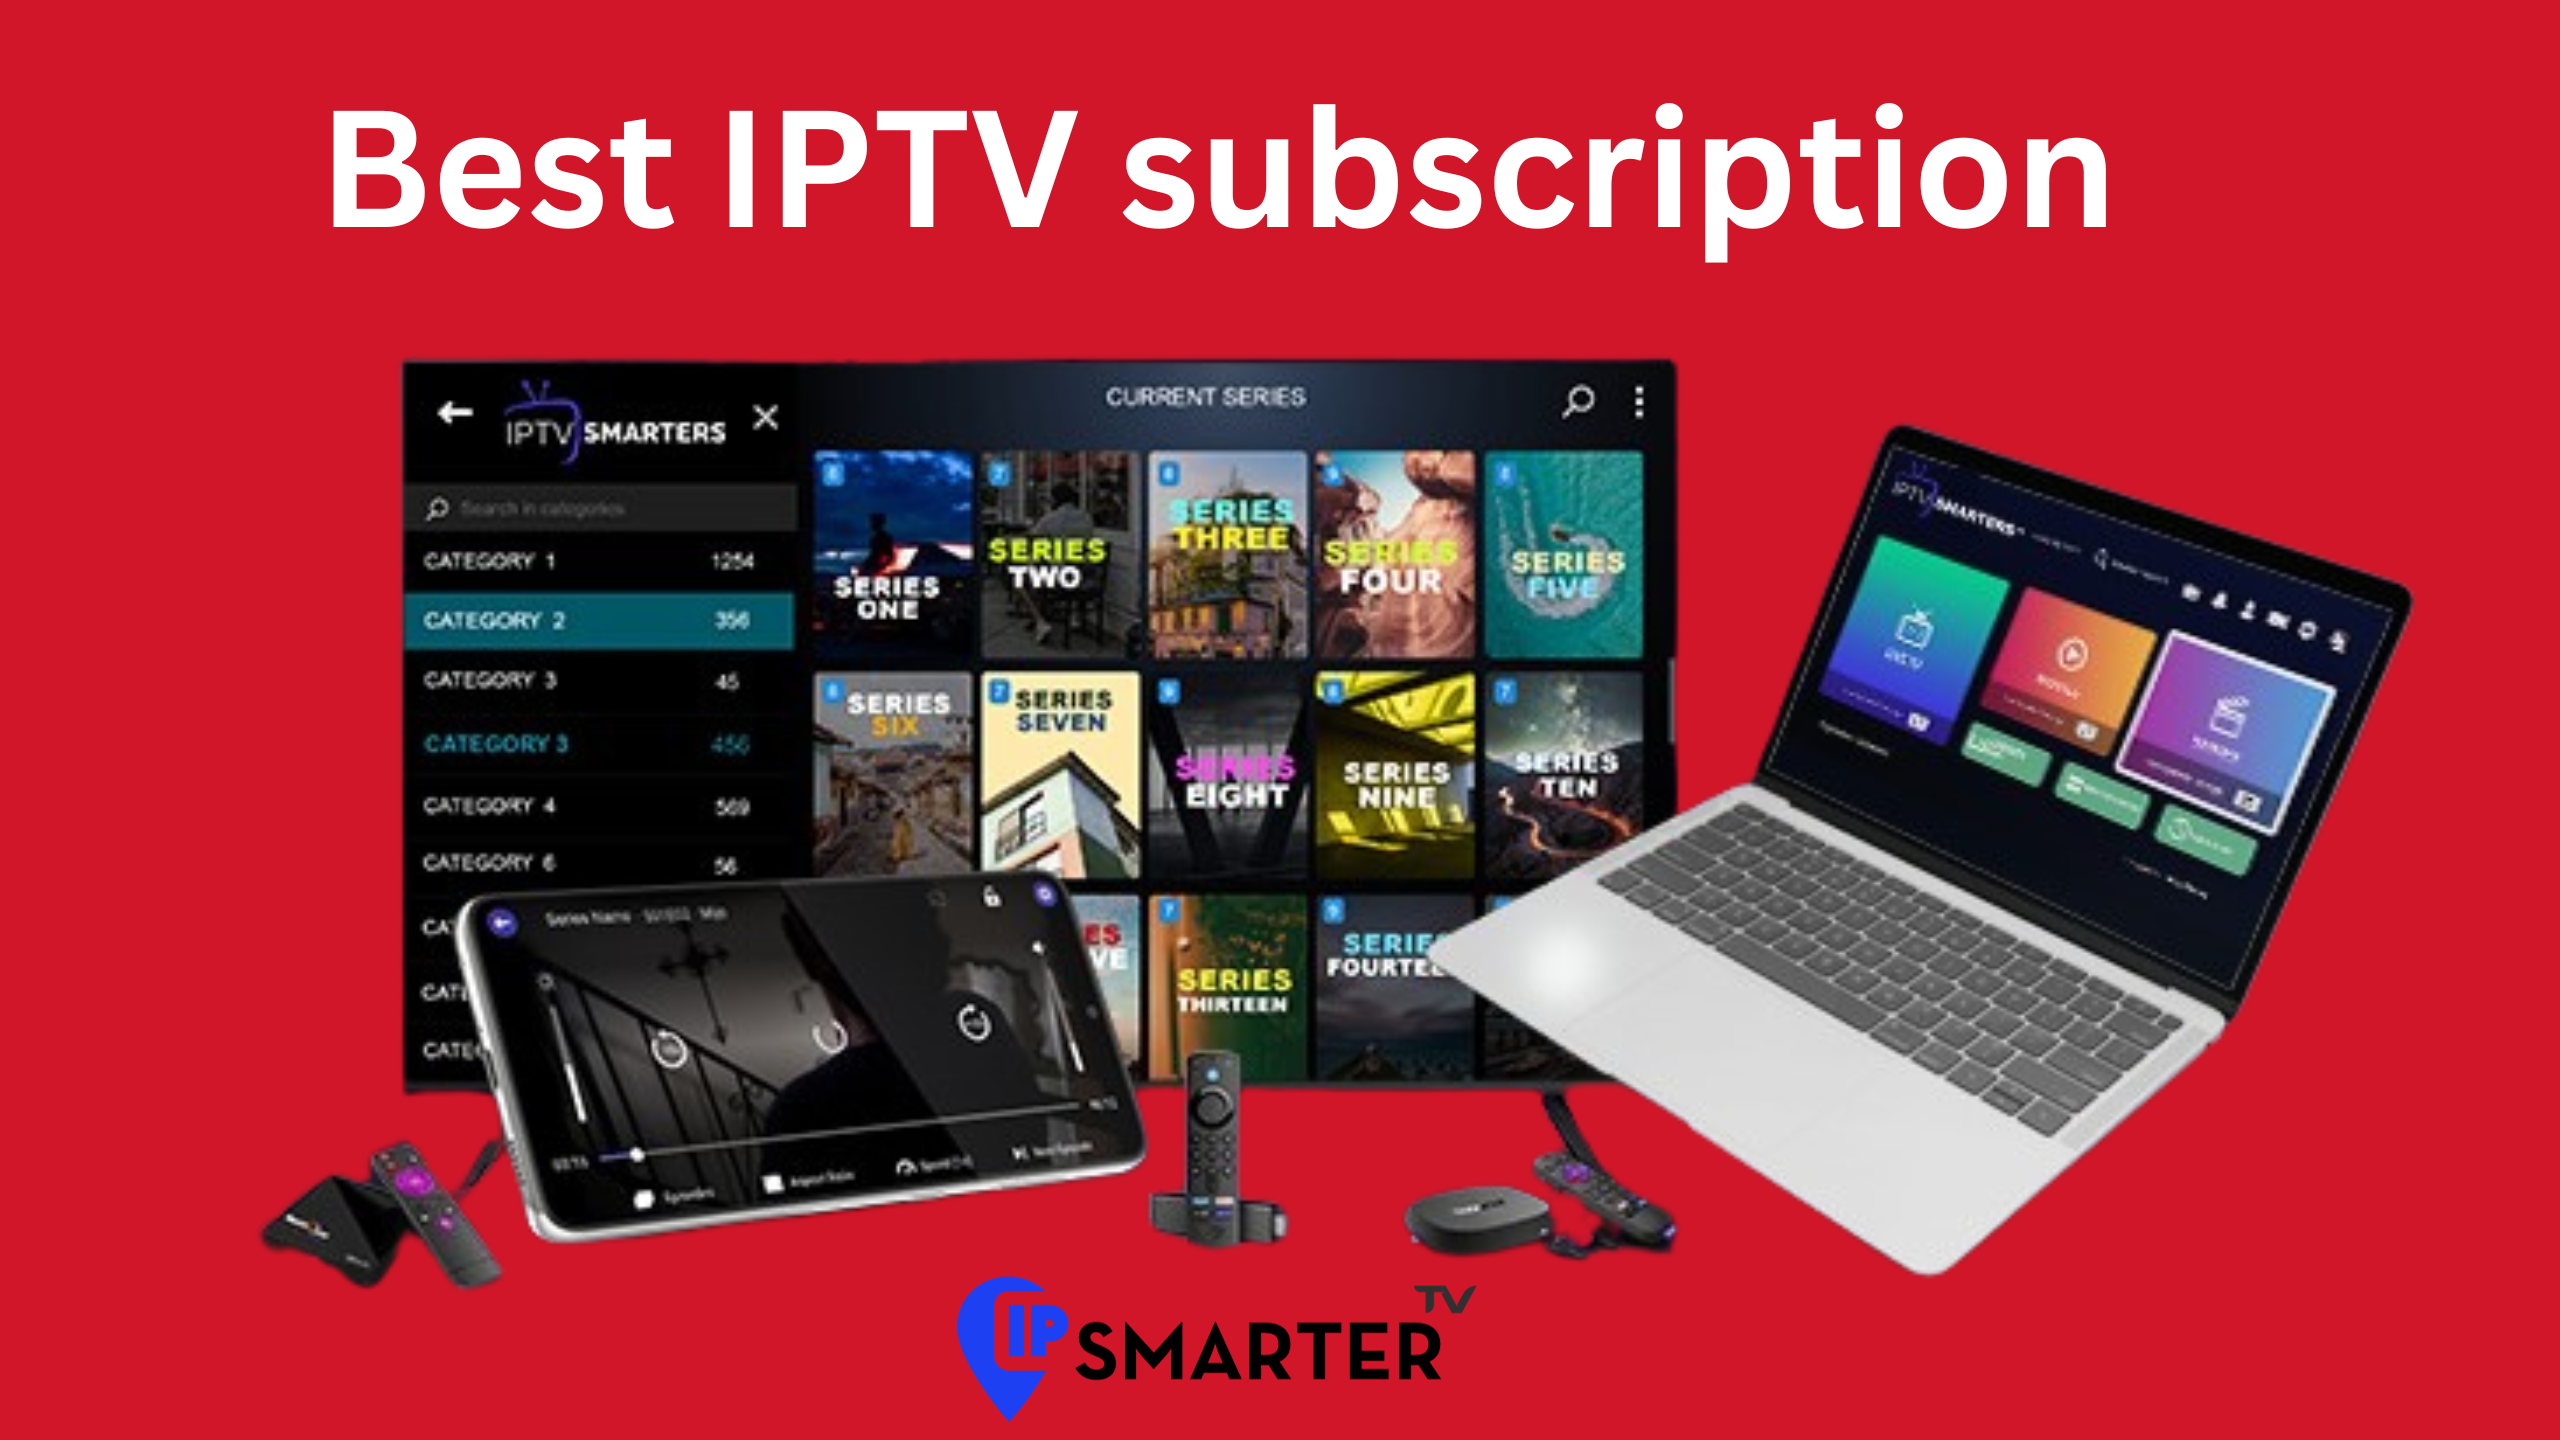 IPTV purchase